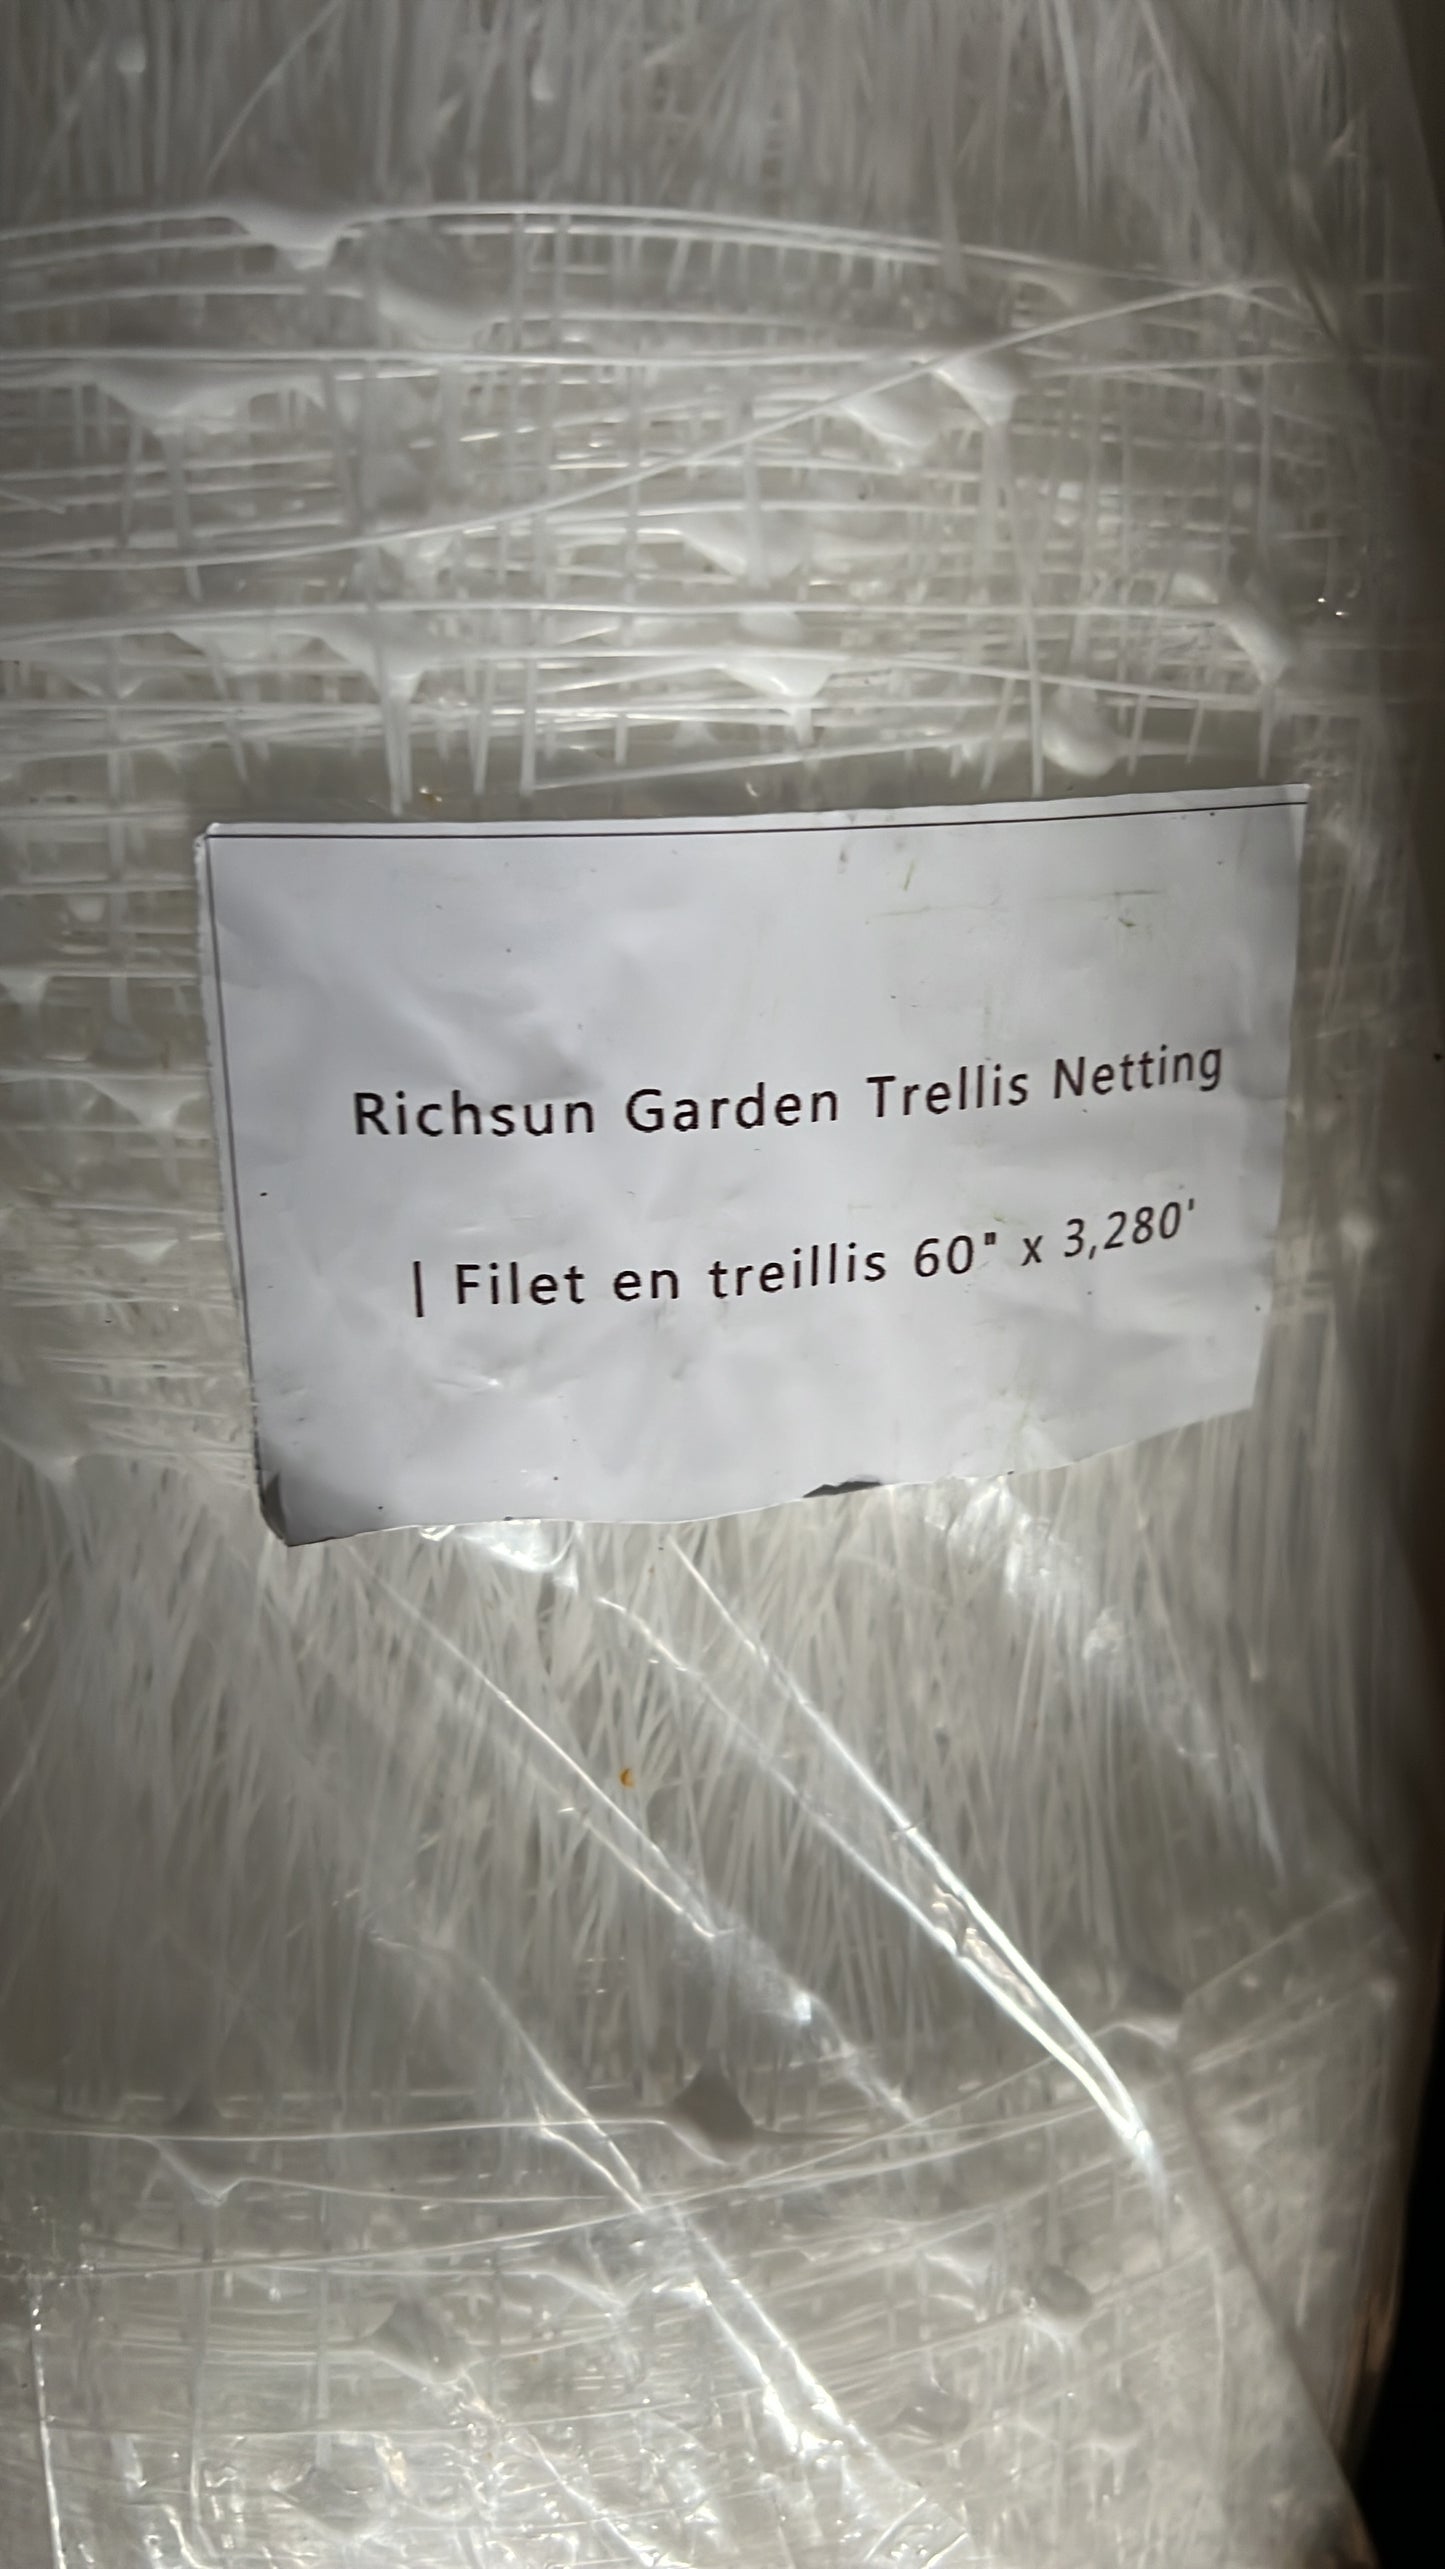 RichSun Garden Trellis Netting (5 x 3280 Feet)